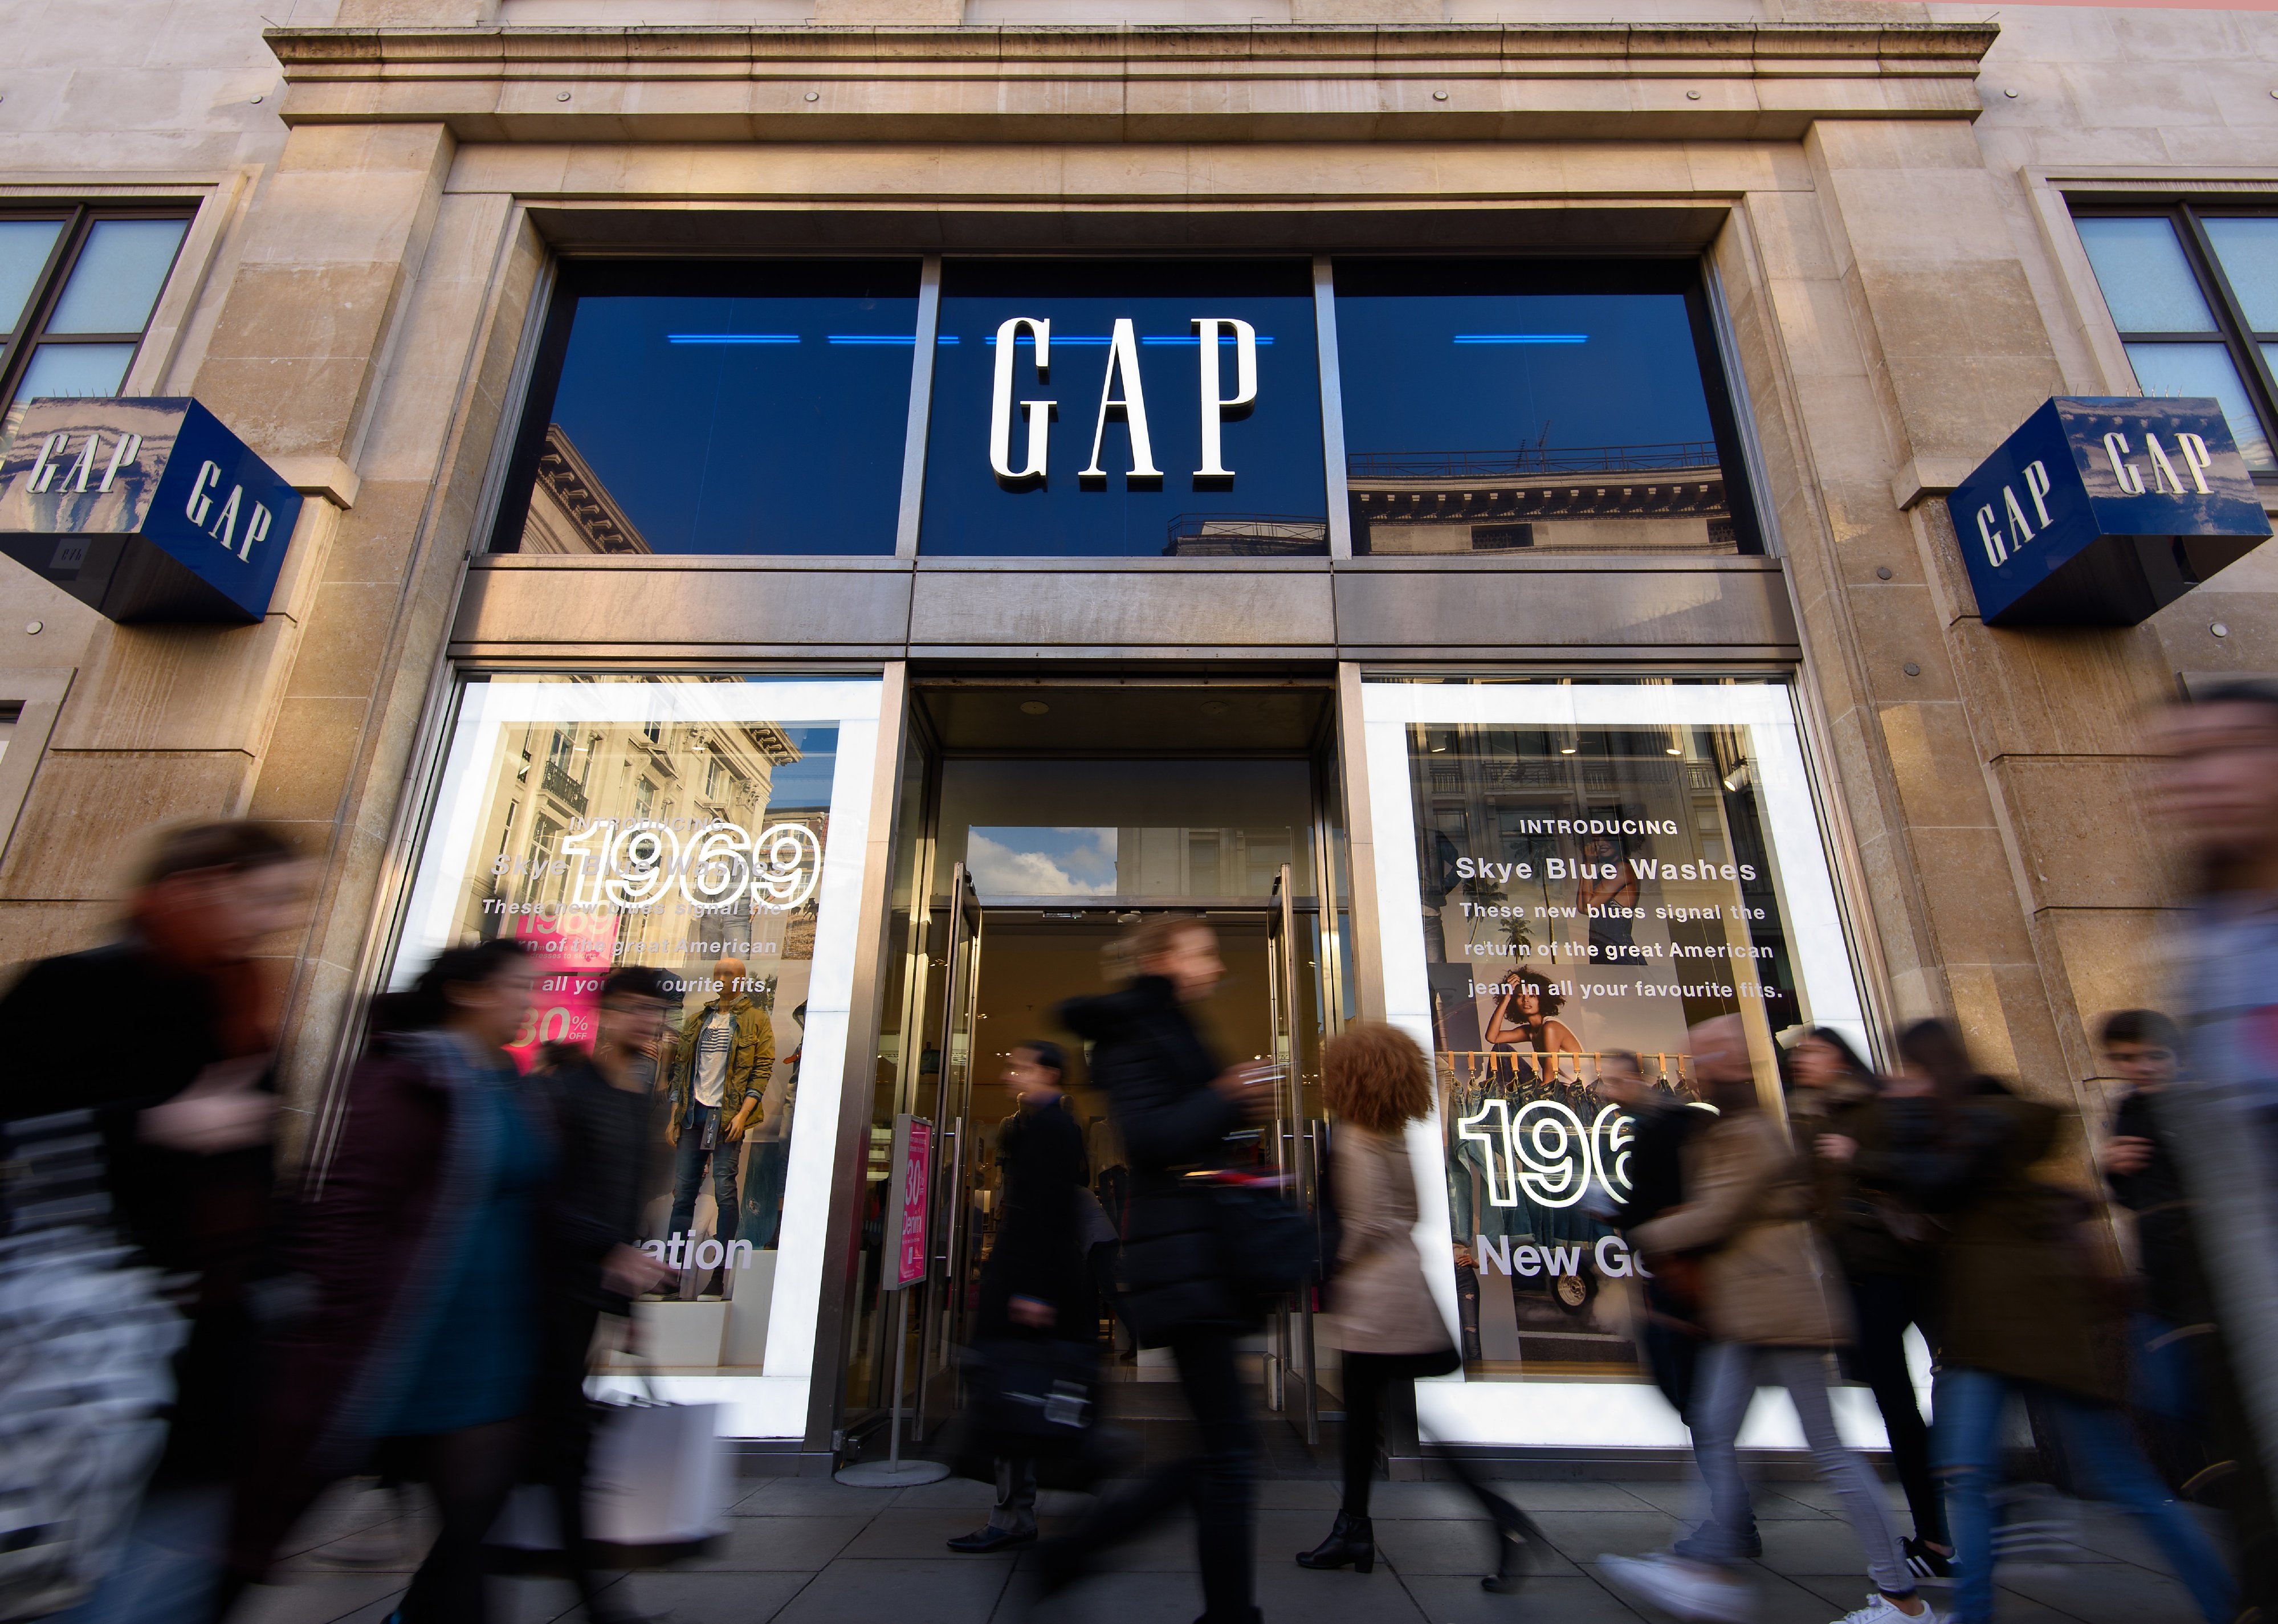 An exterior view of fashion retailer Gap's Oxford Street store